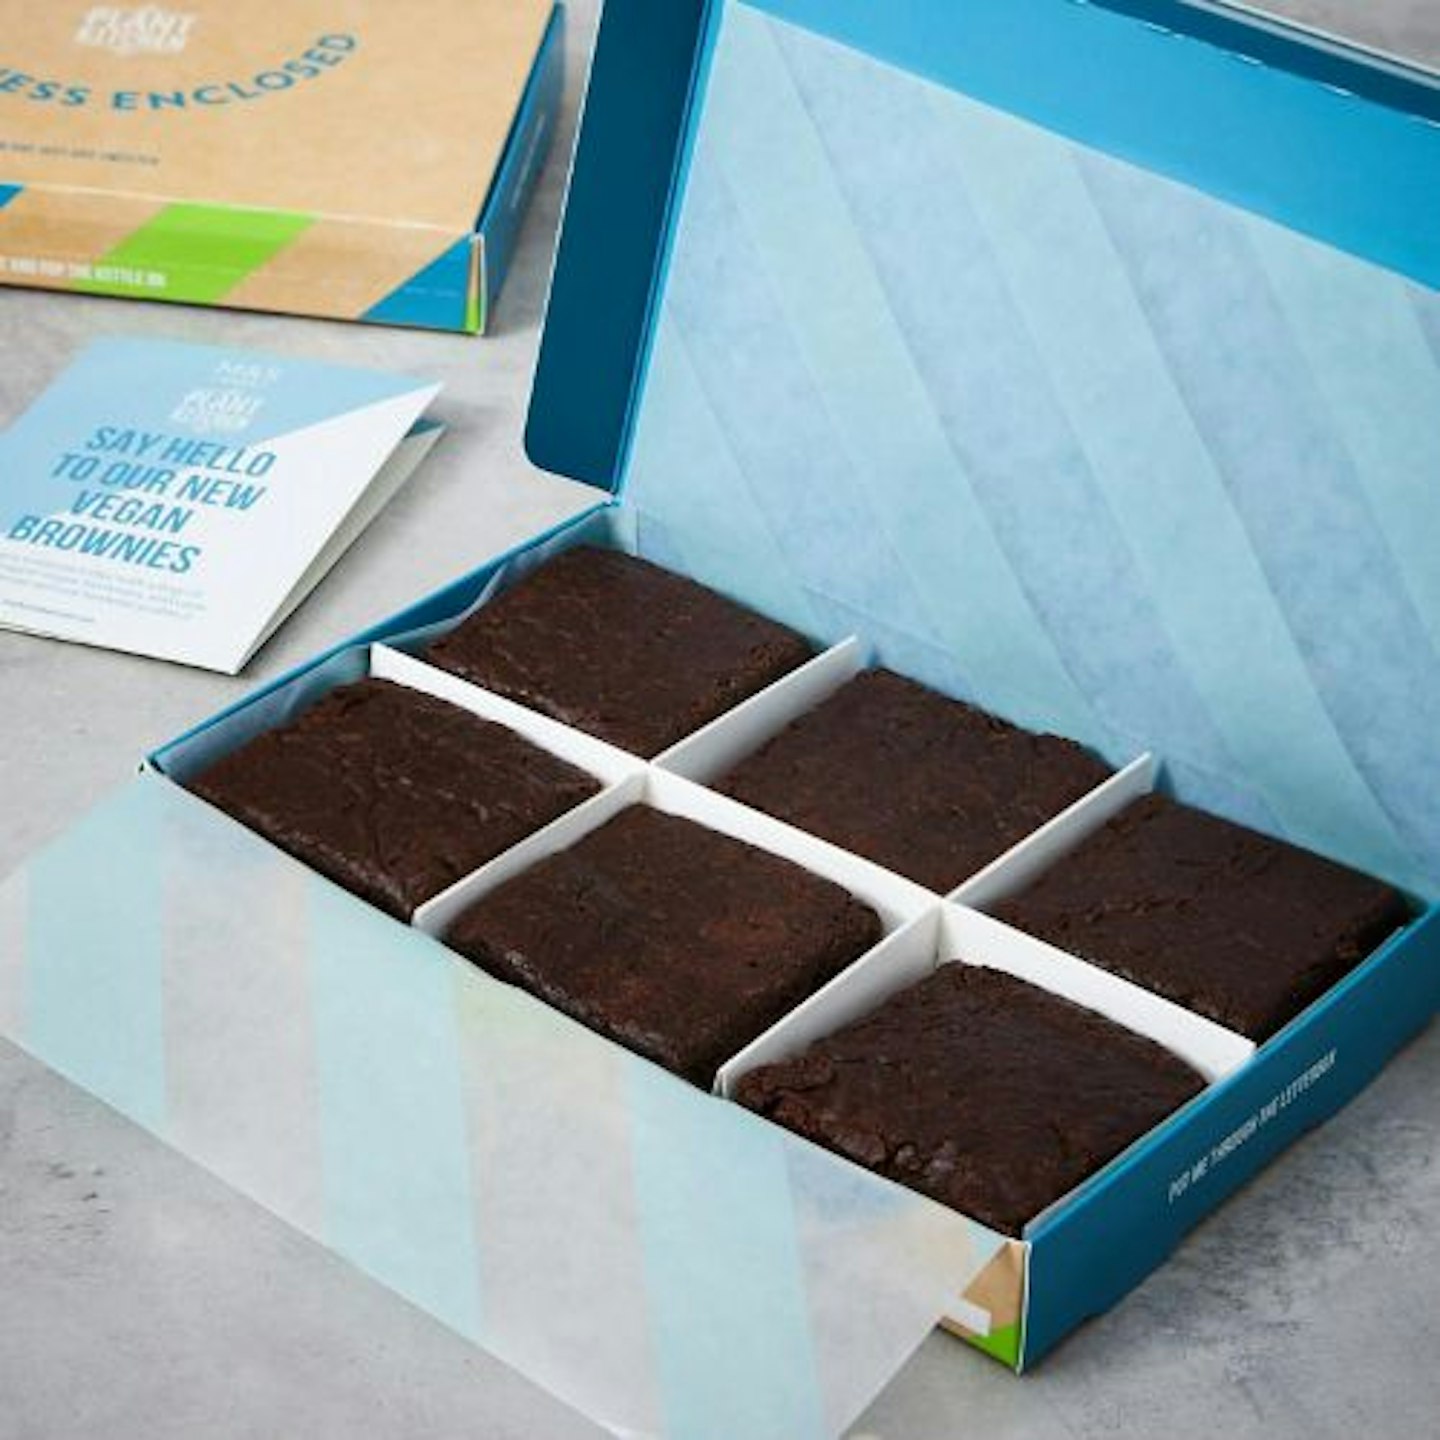 The best supermarket birthday cakes:  6 Plant Kitchen Chocolate Brownies